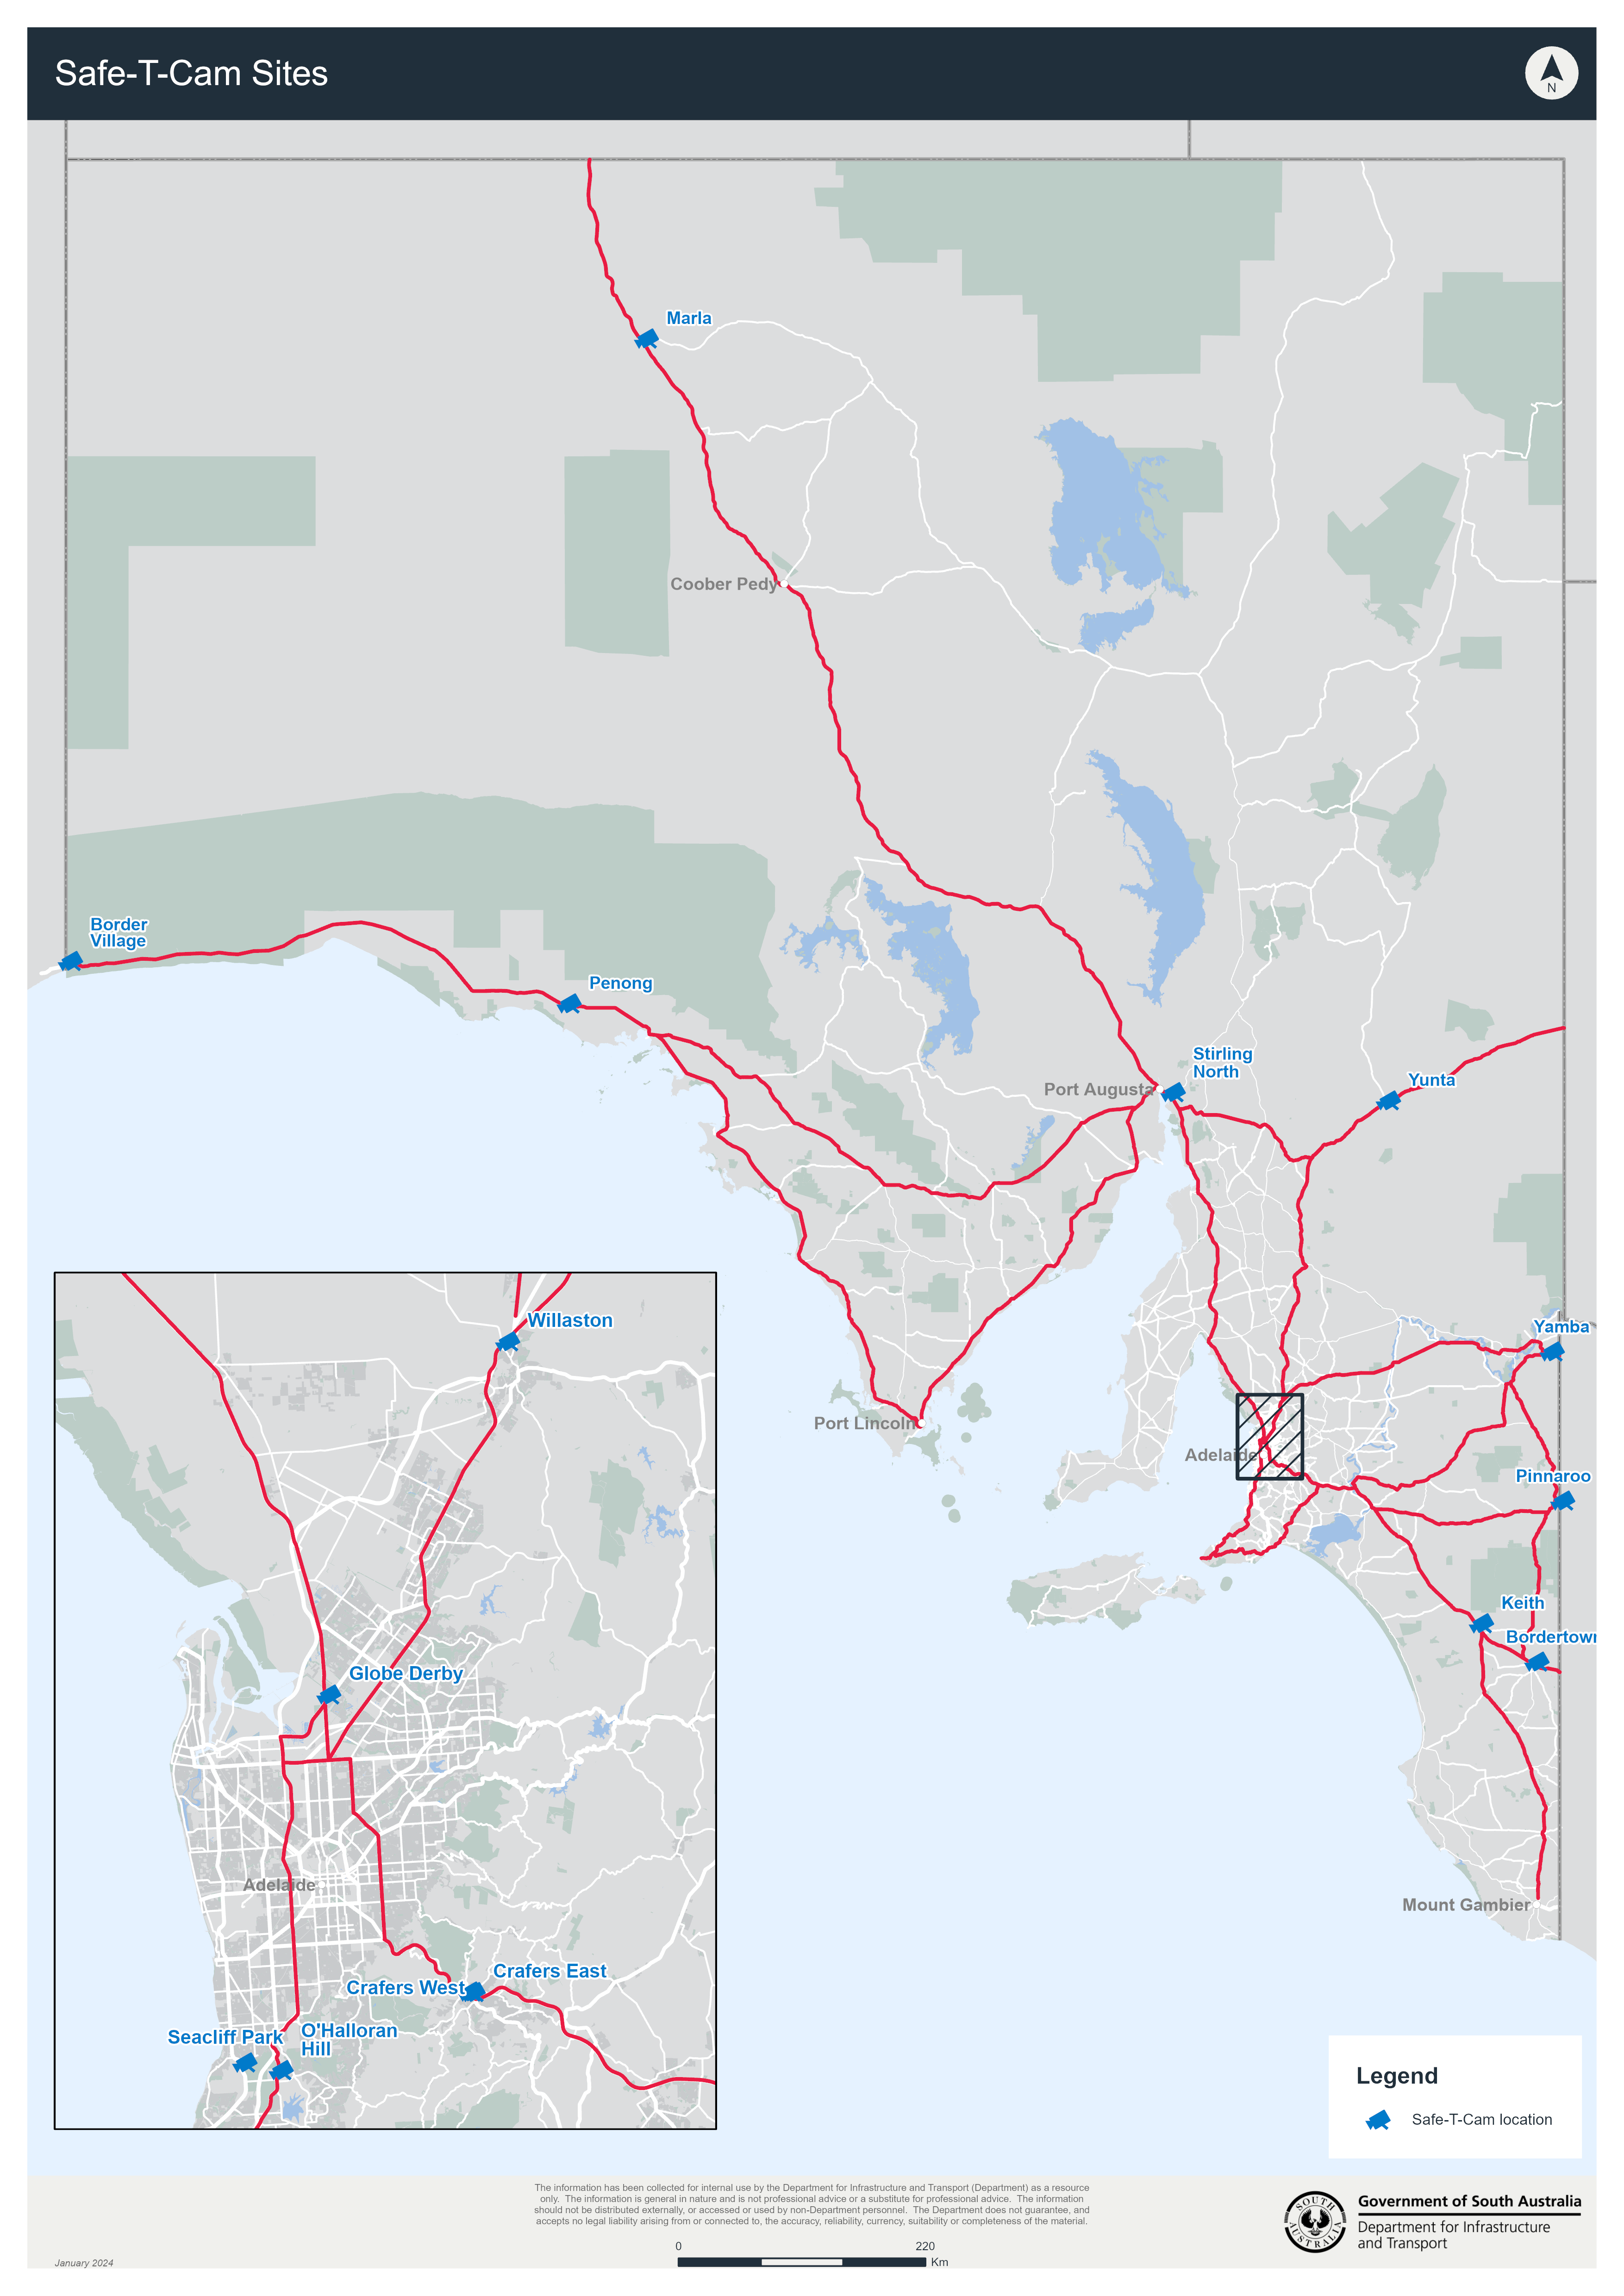 Map showing Safe-T-Cam Sites at Globe Derby, Willaston, Crafers, Border Village, Marla, Stirling North, Yunta, Yamba, Pinnaroo, Kieth, and Bordertown.